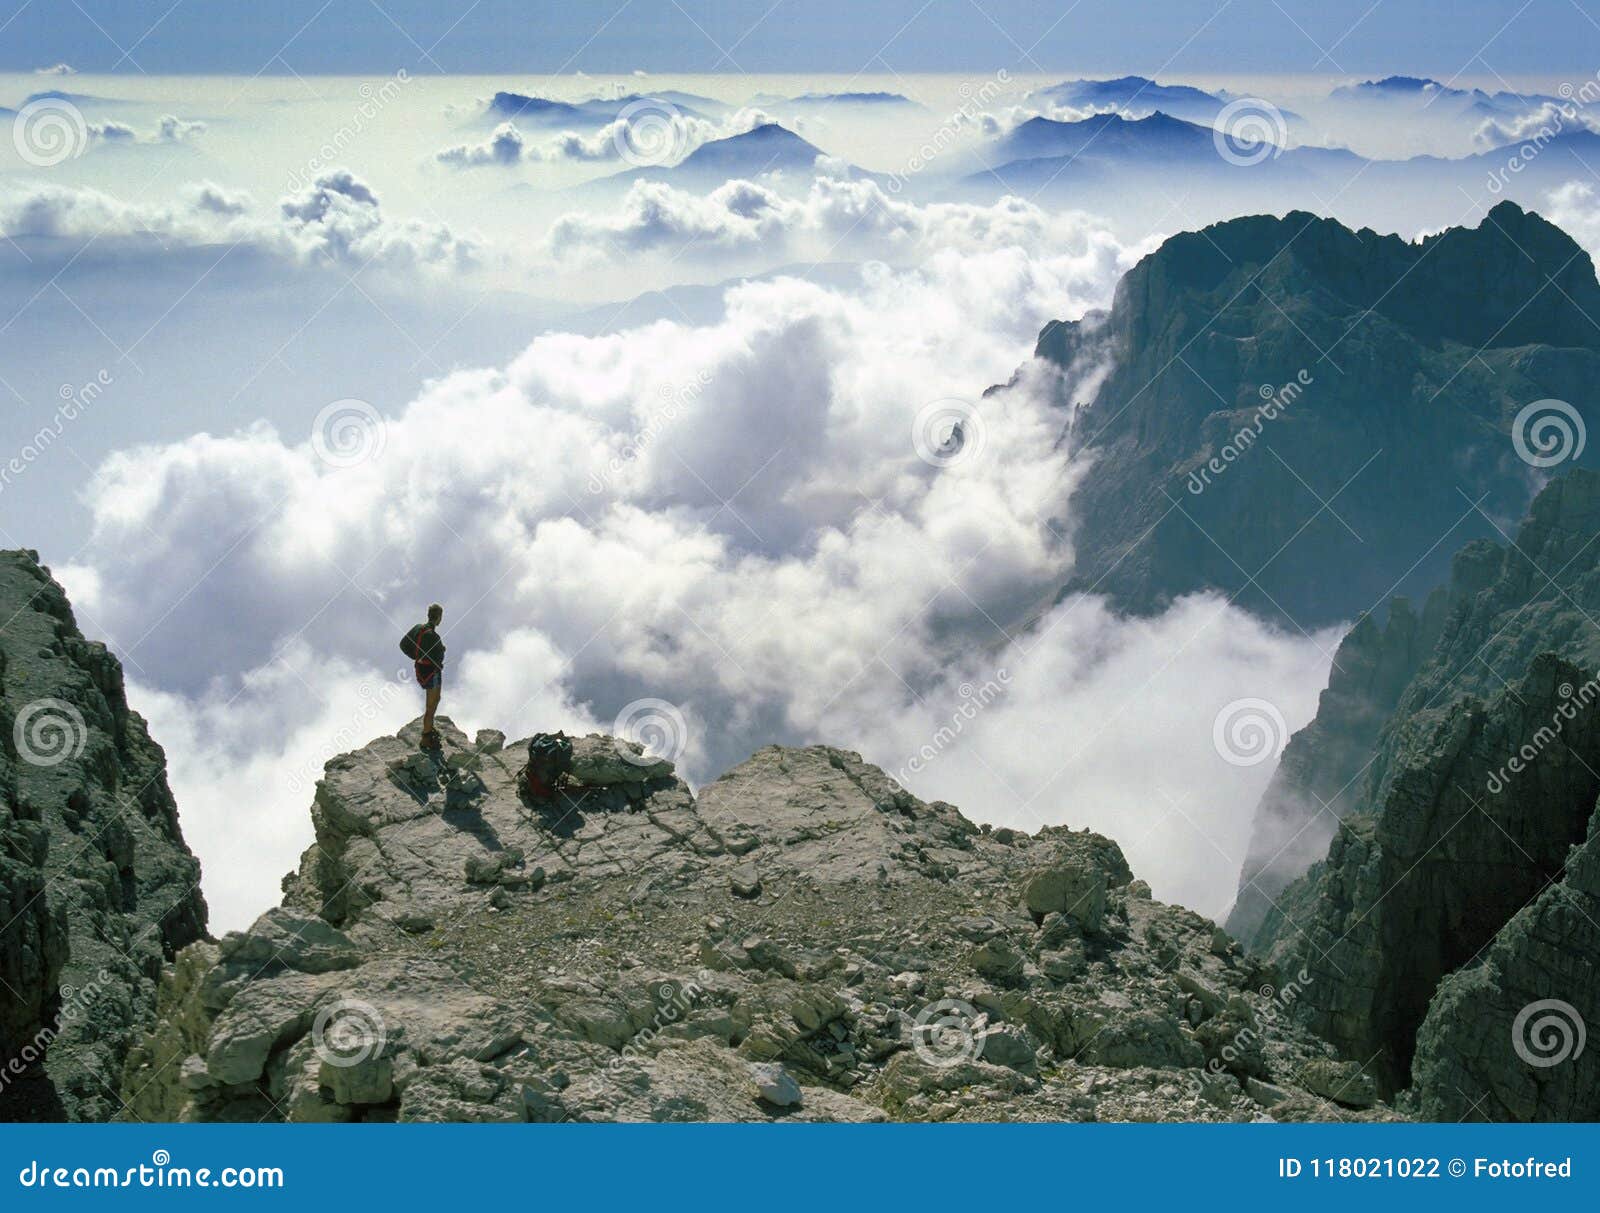 climber admiring breathtaking mountain panorama